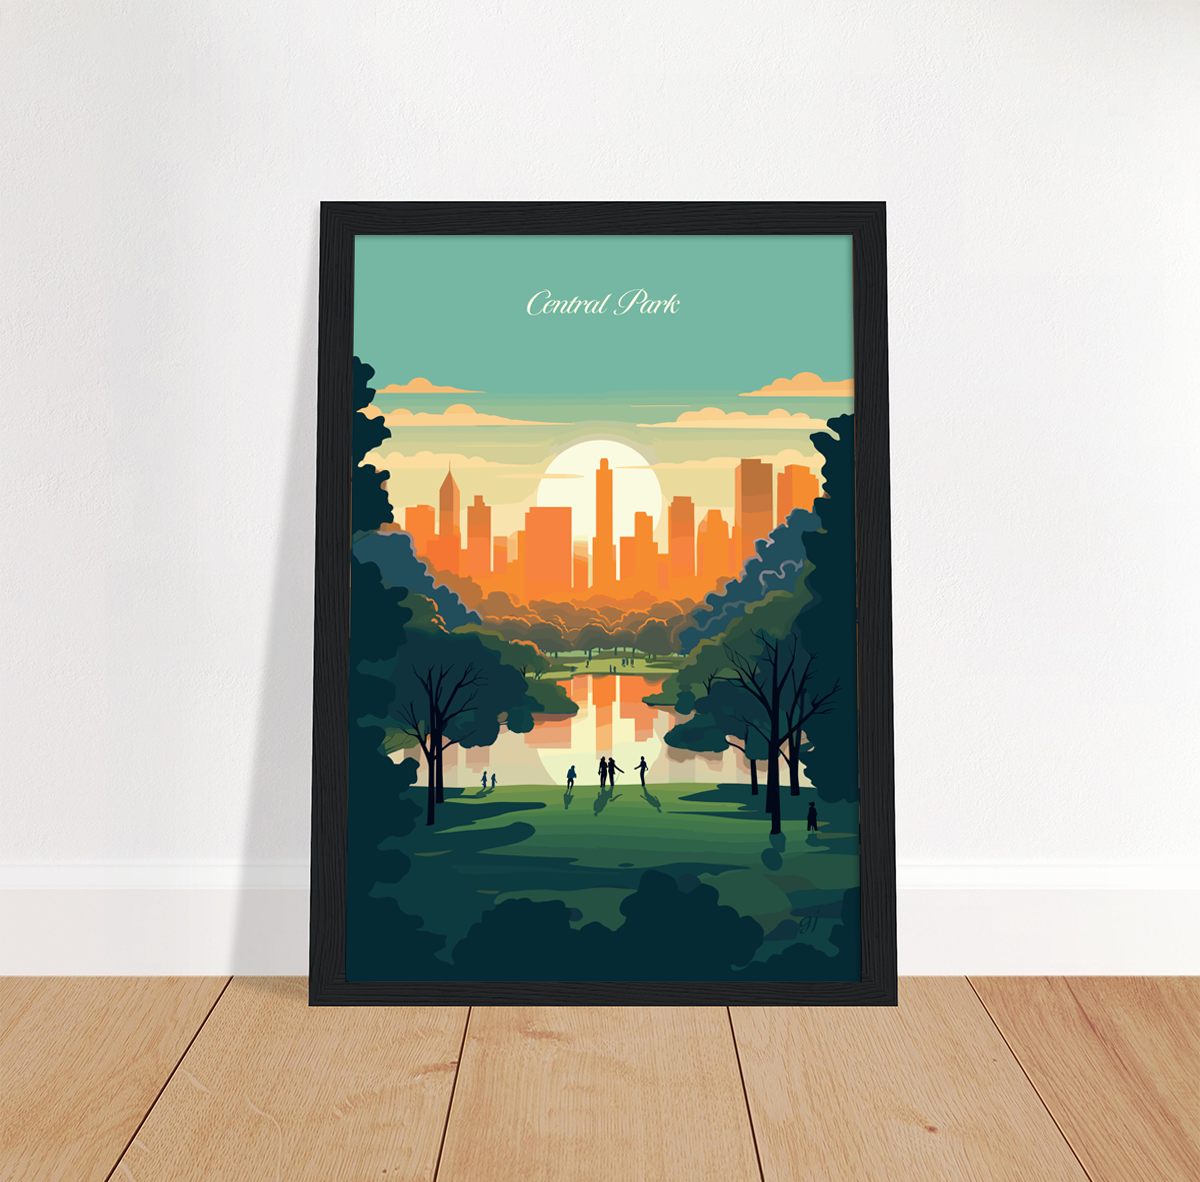 New York - Central Park poster by bon voyage design